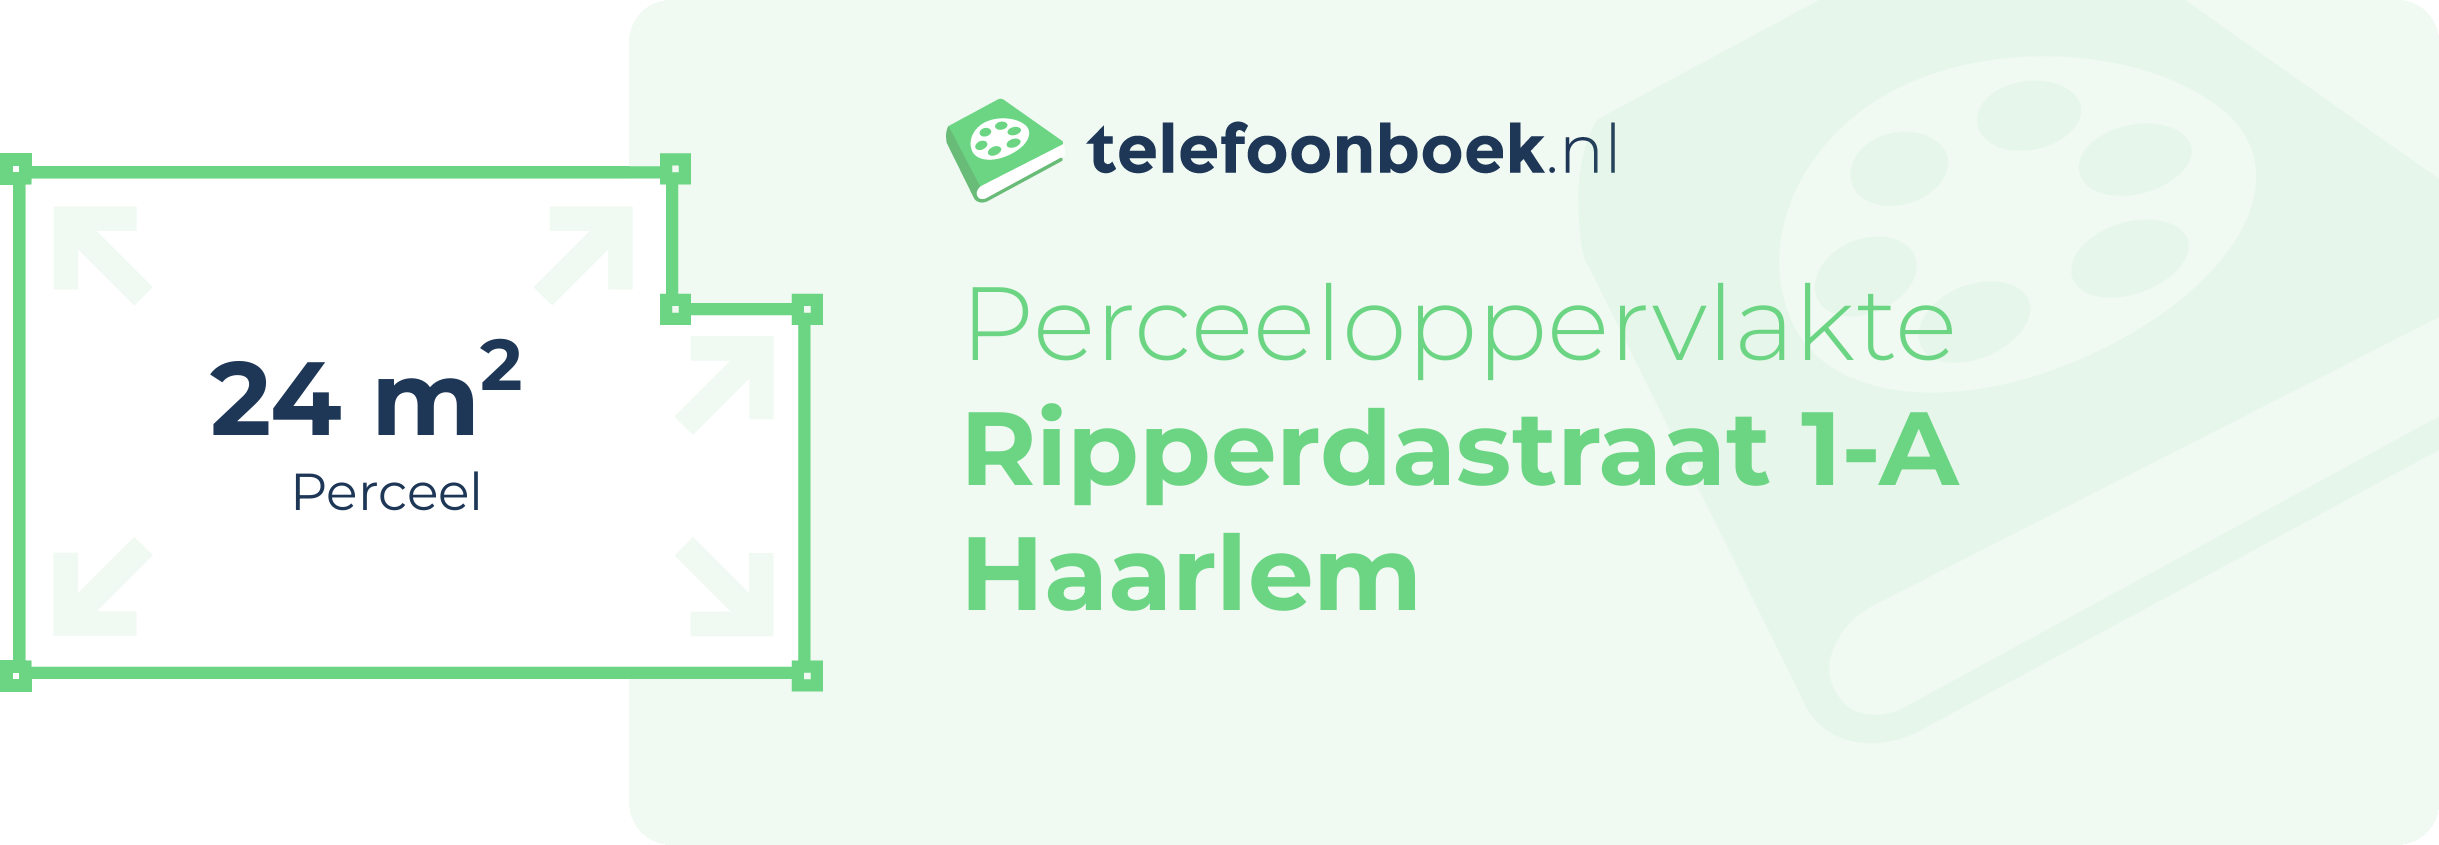 Perceeloppervlakte Ripperdastraat 1-A Haarlem